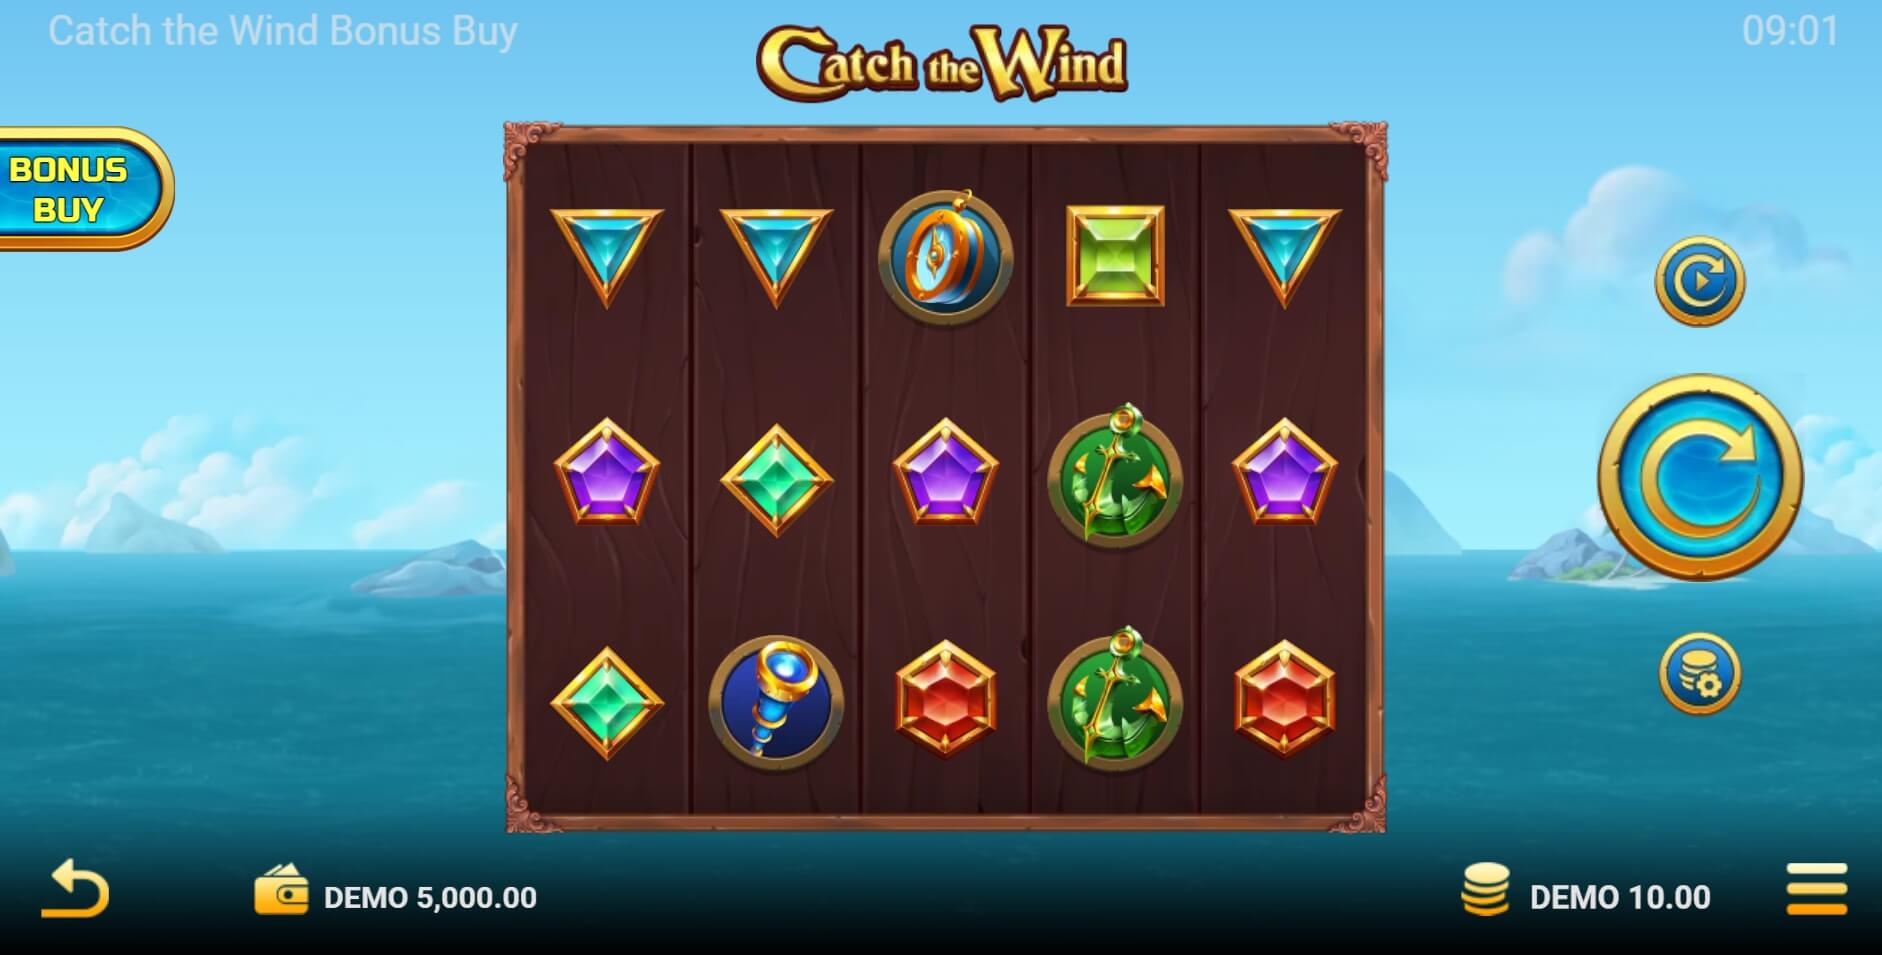 Catch the Wind Bonus Buy Evo Play ซุปเปอร์สล็อต ใหม่ล่าสุด